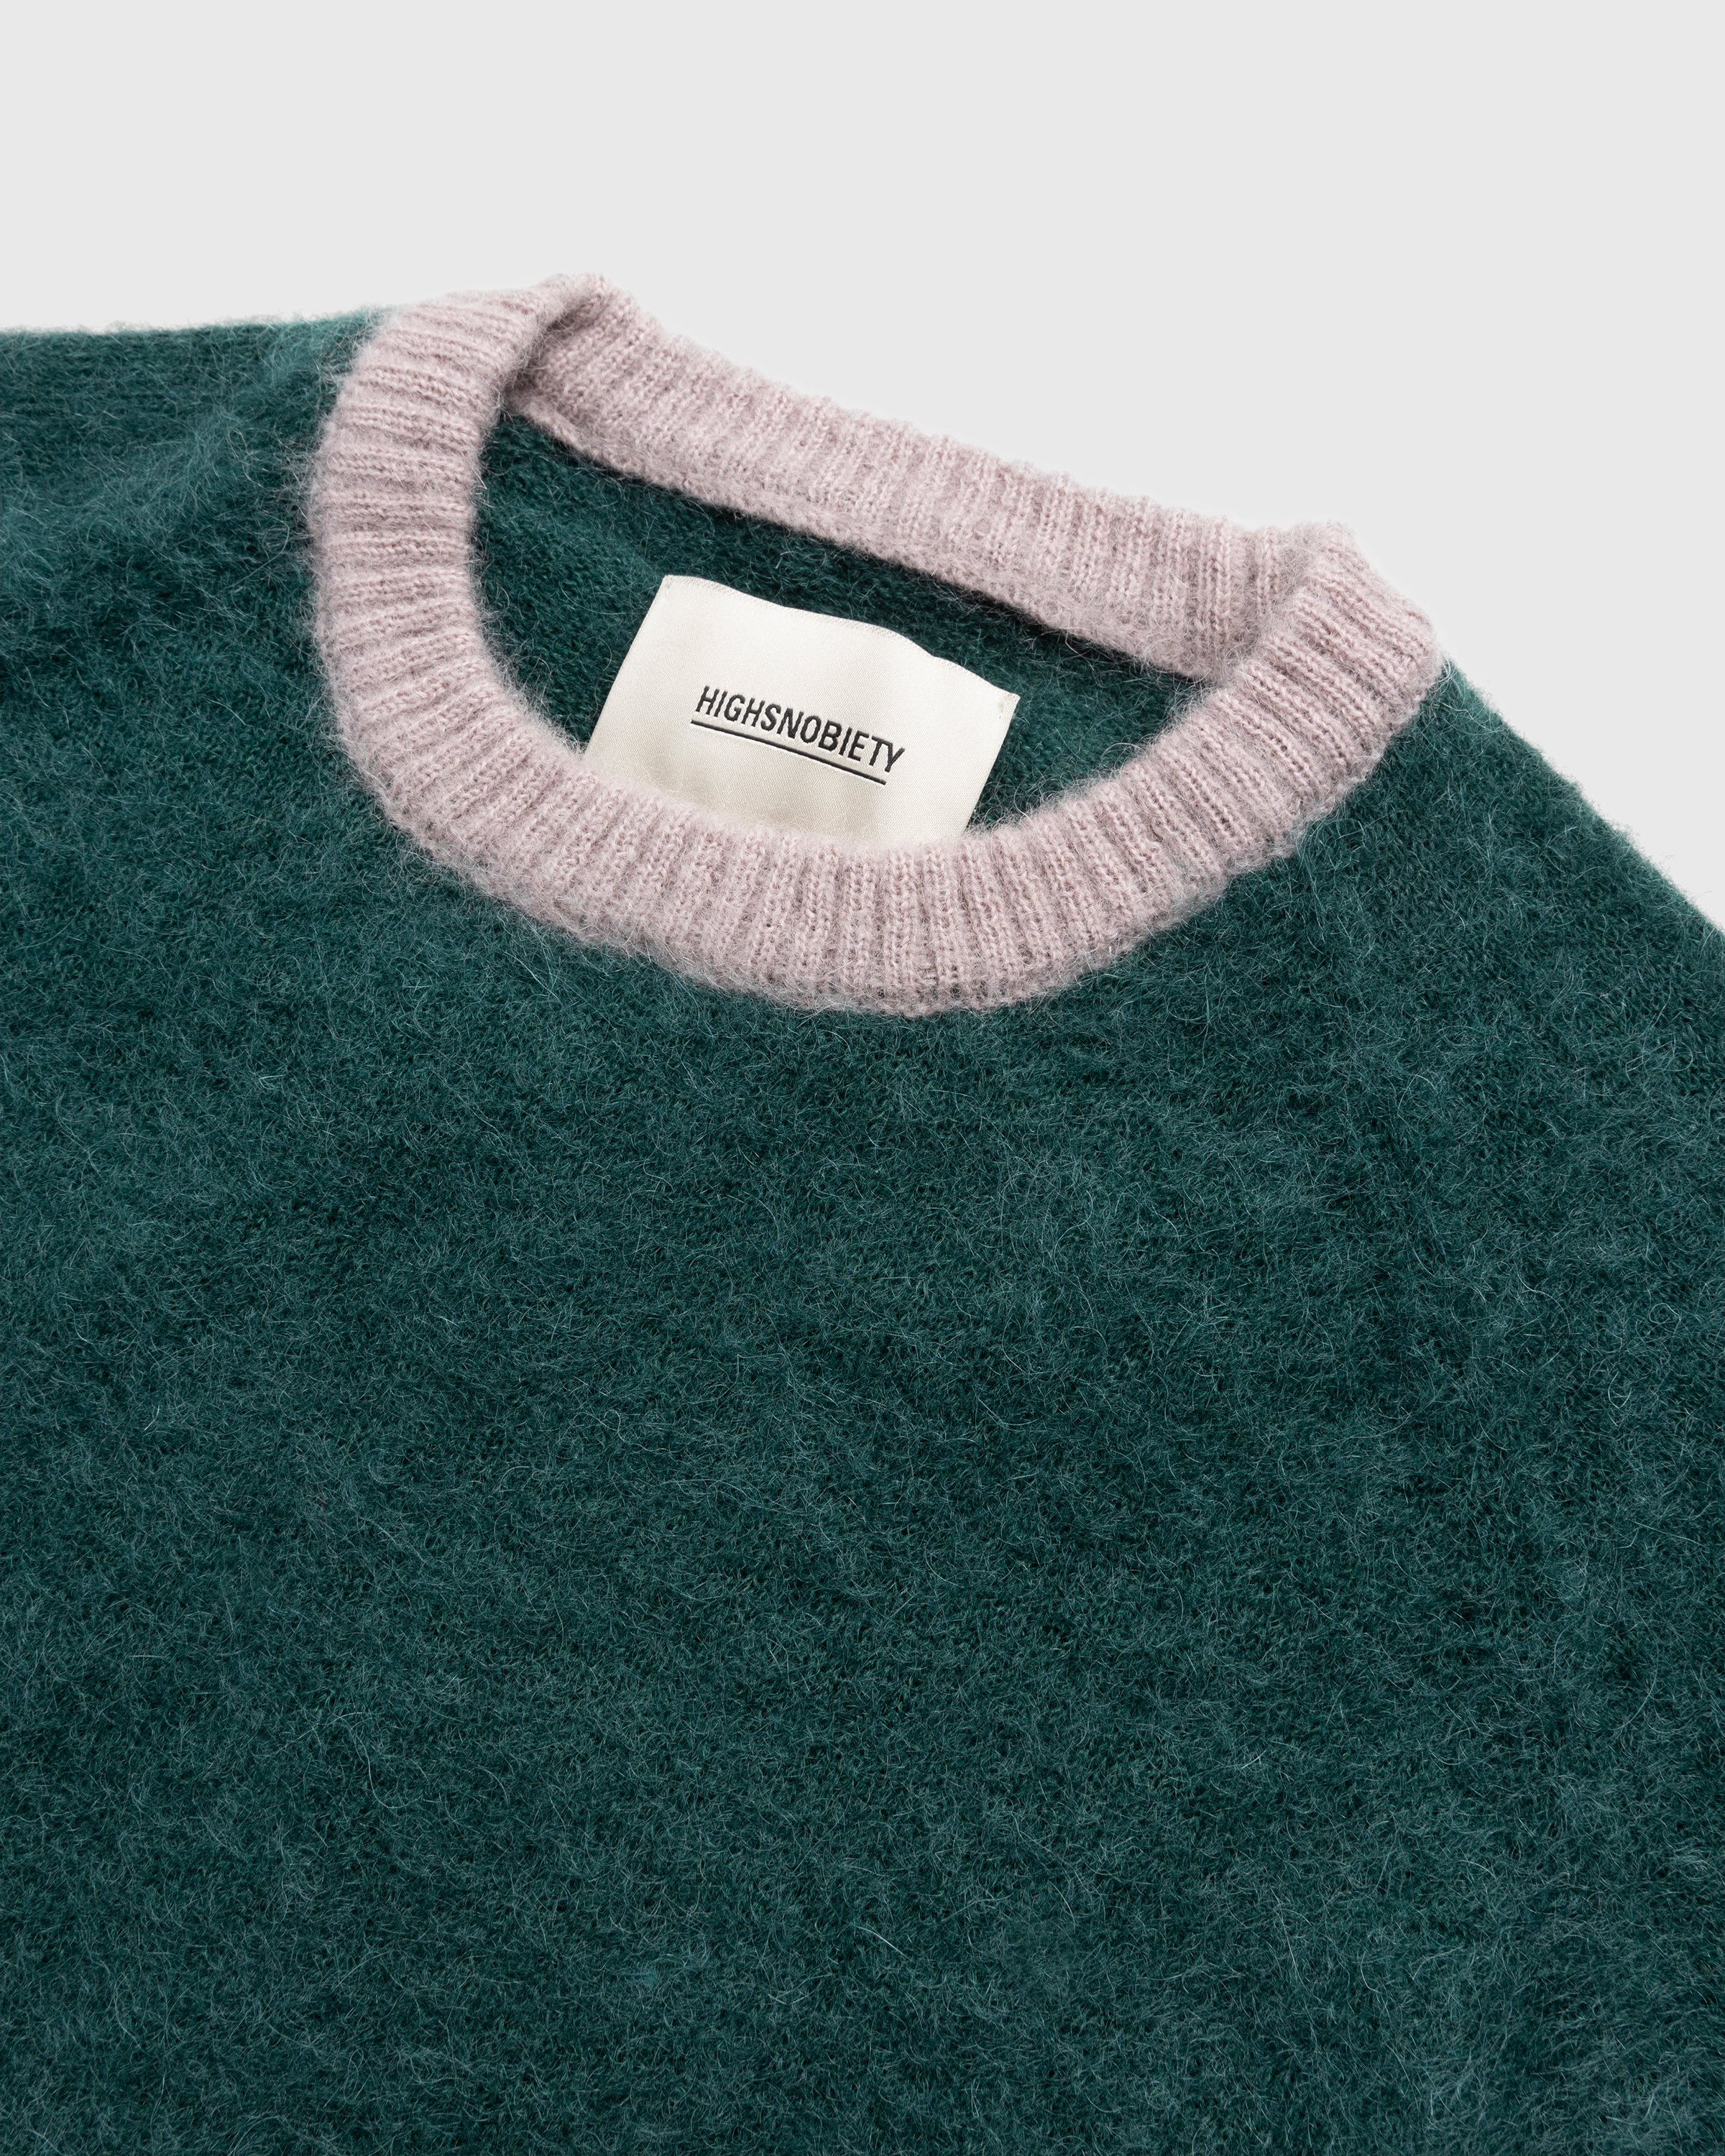 Highsnobiety - Alpaca Sweater Green Kids - Clothing - Green - Image 3